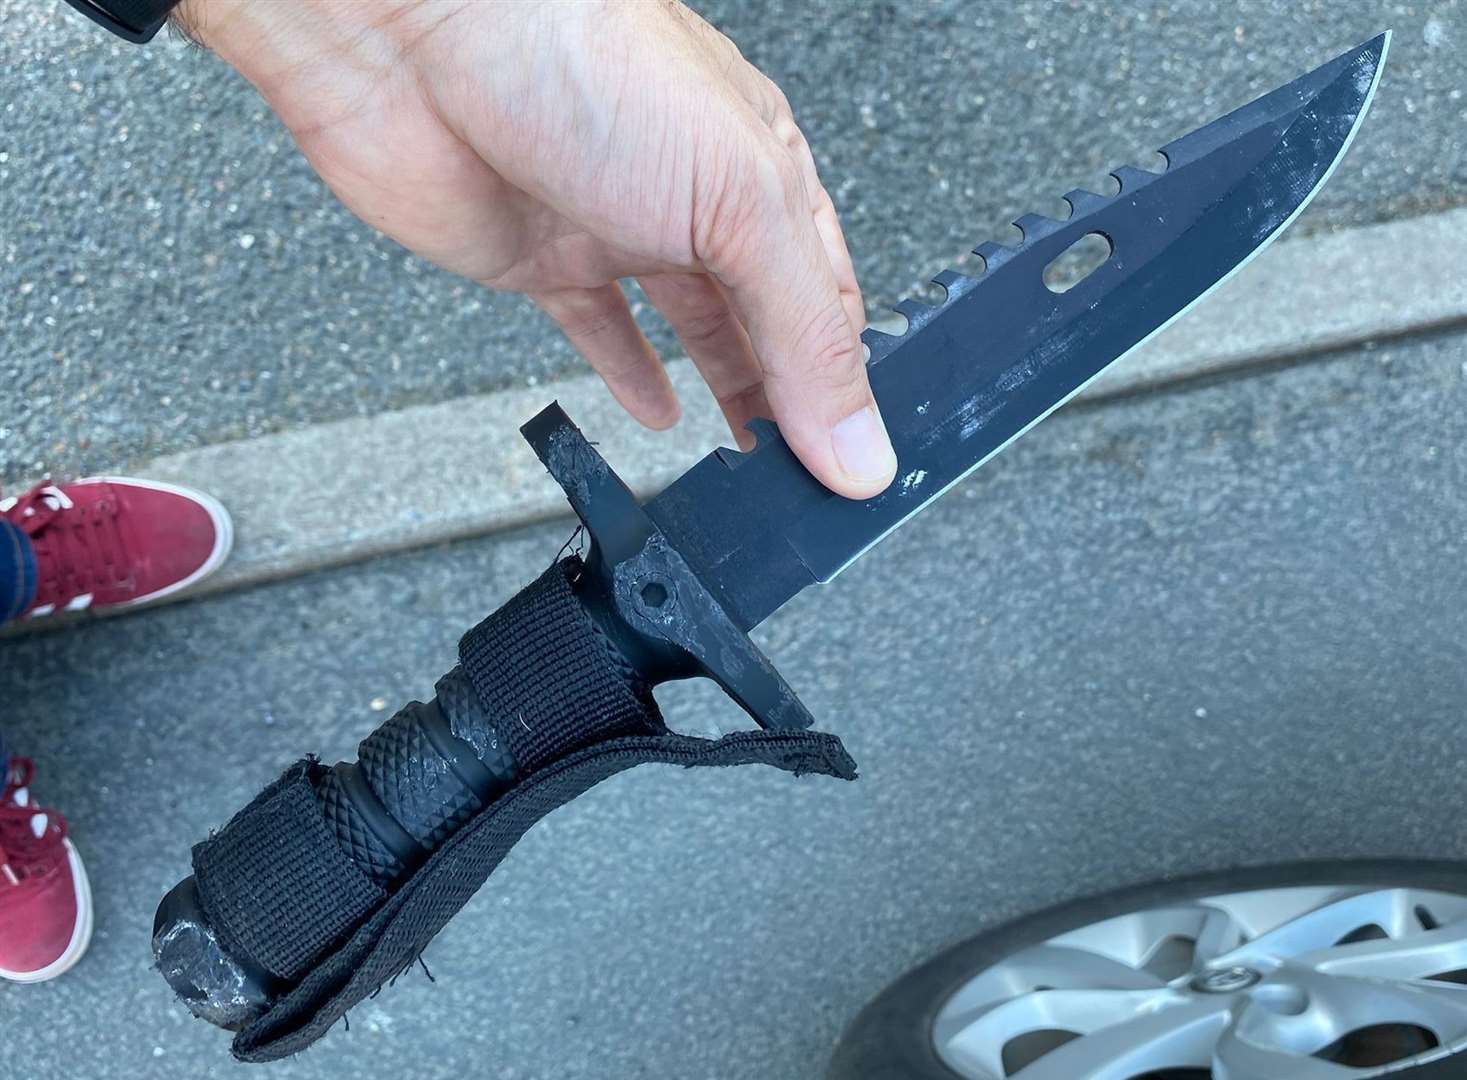 Michael Cross found a hunting knife in Edwin Road, Rainham